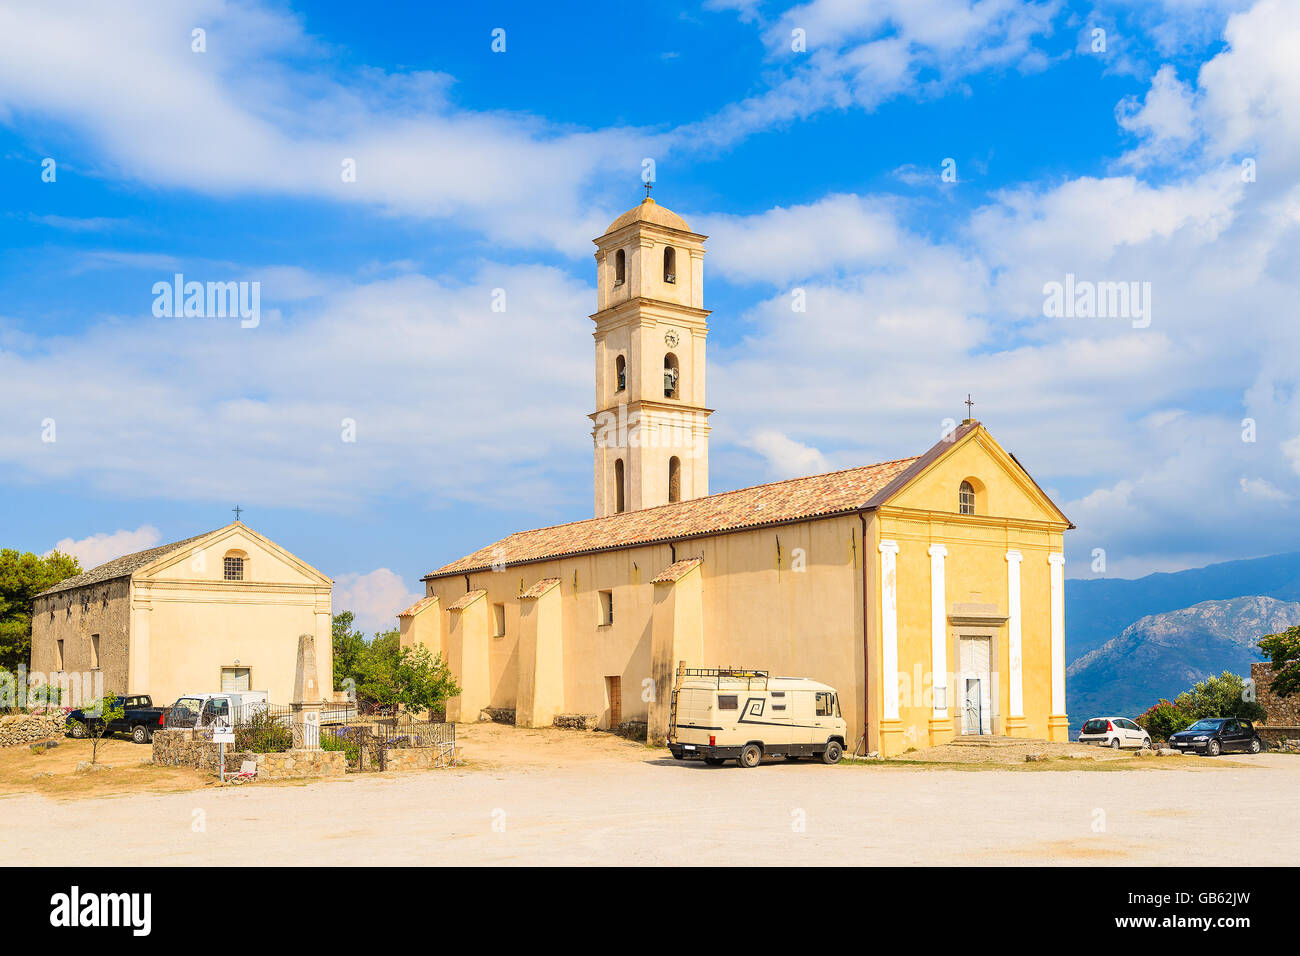 Church in mountain village of Sant Antonino, Corsica island, France Stock Photo